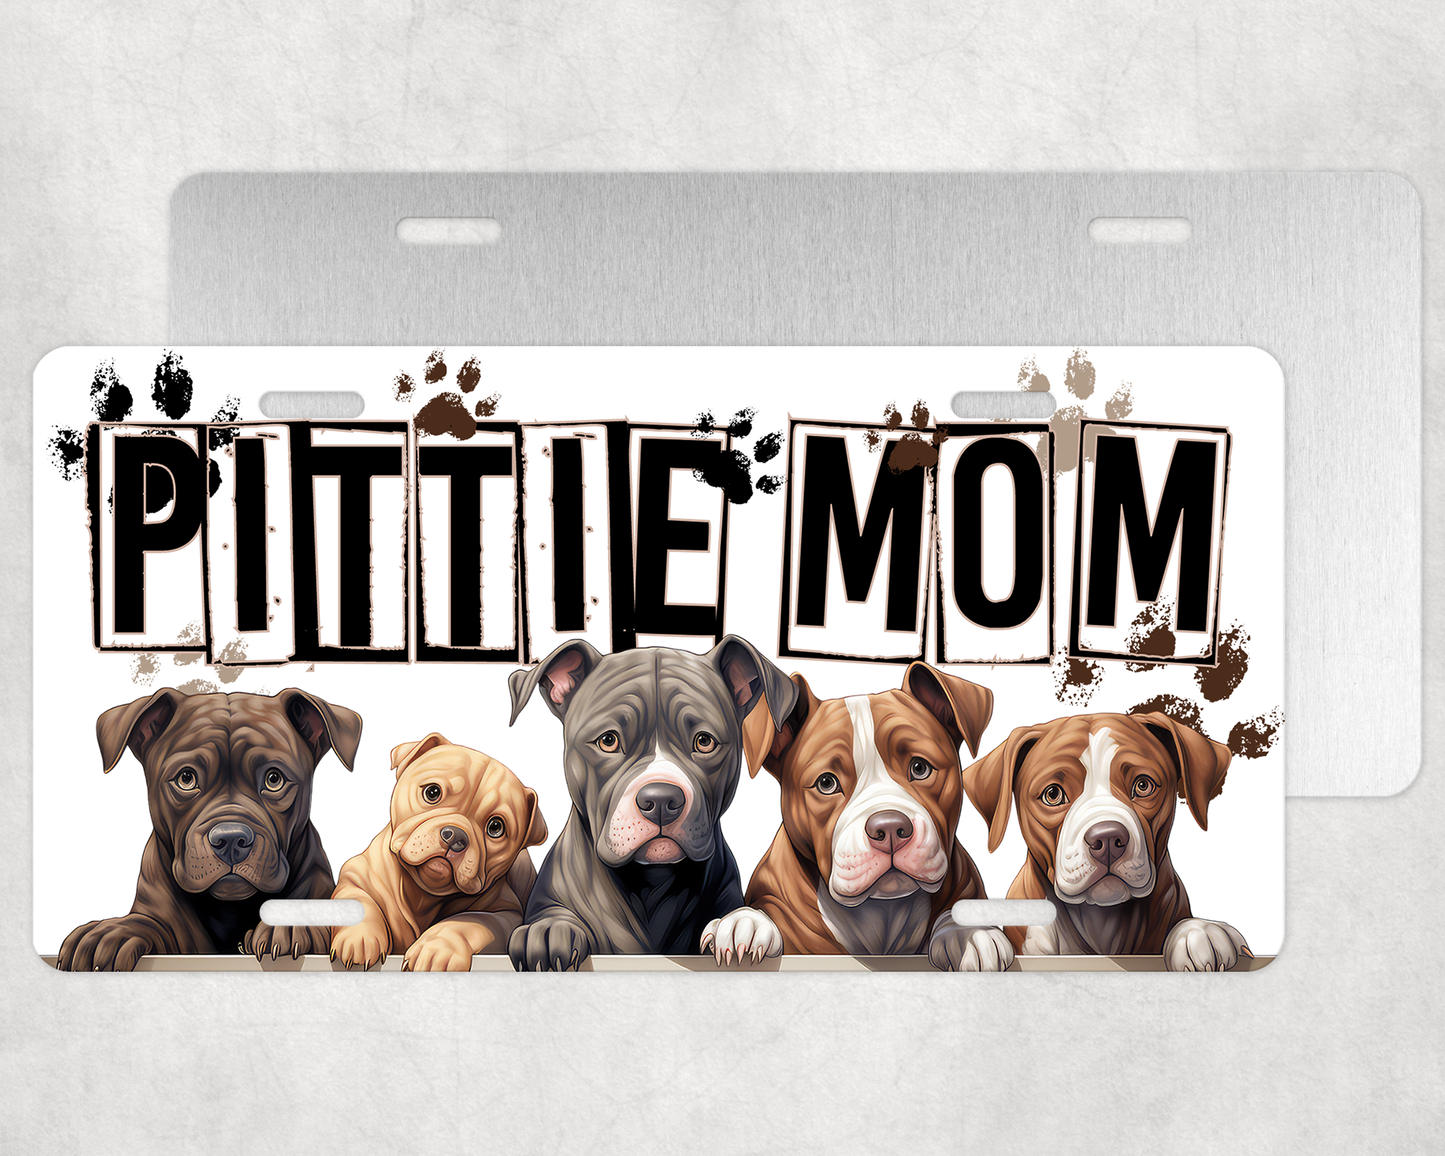 Pittie Mom License Plate